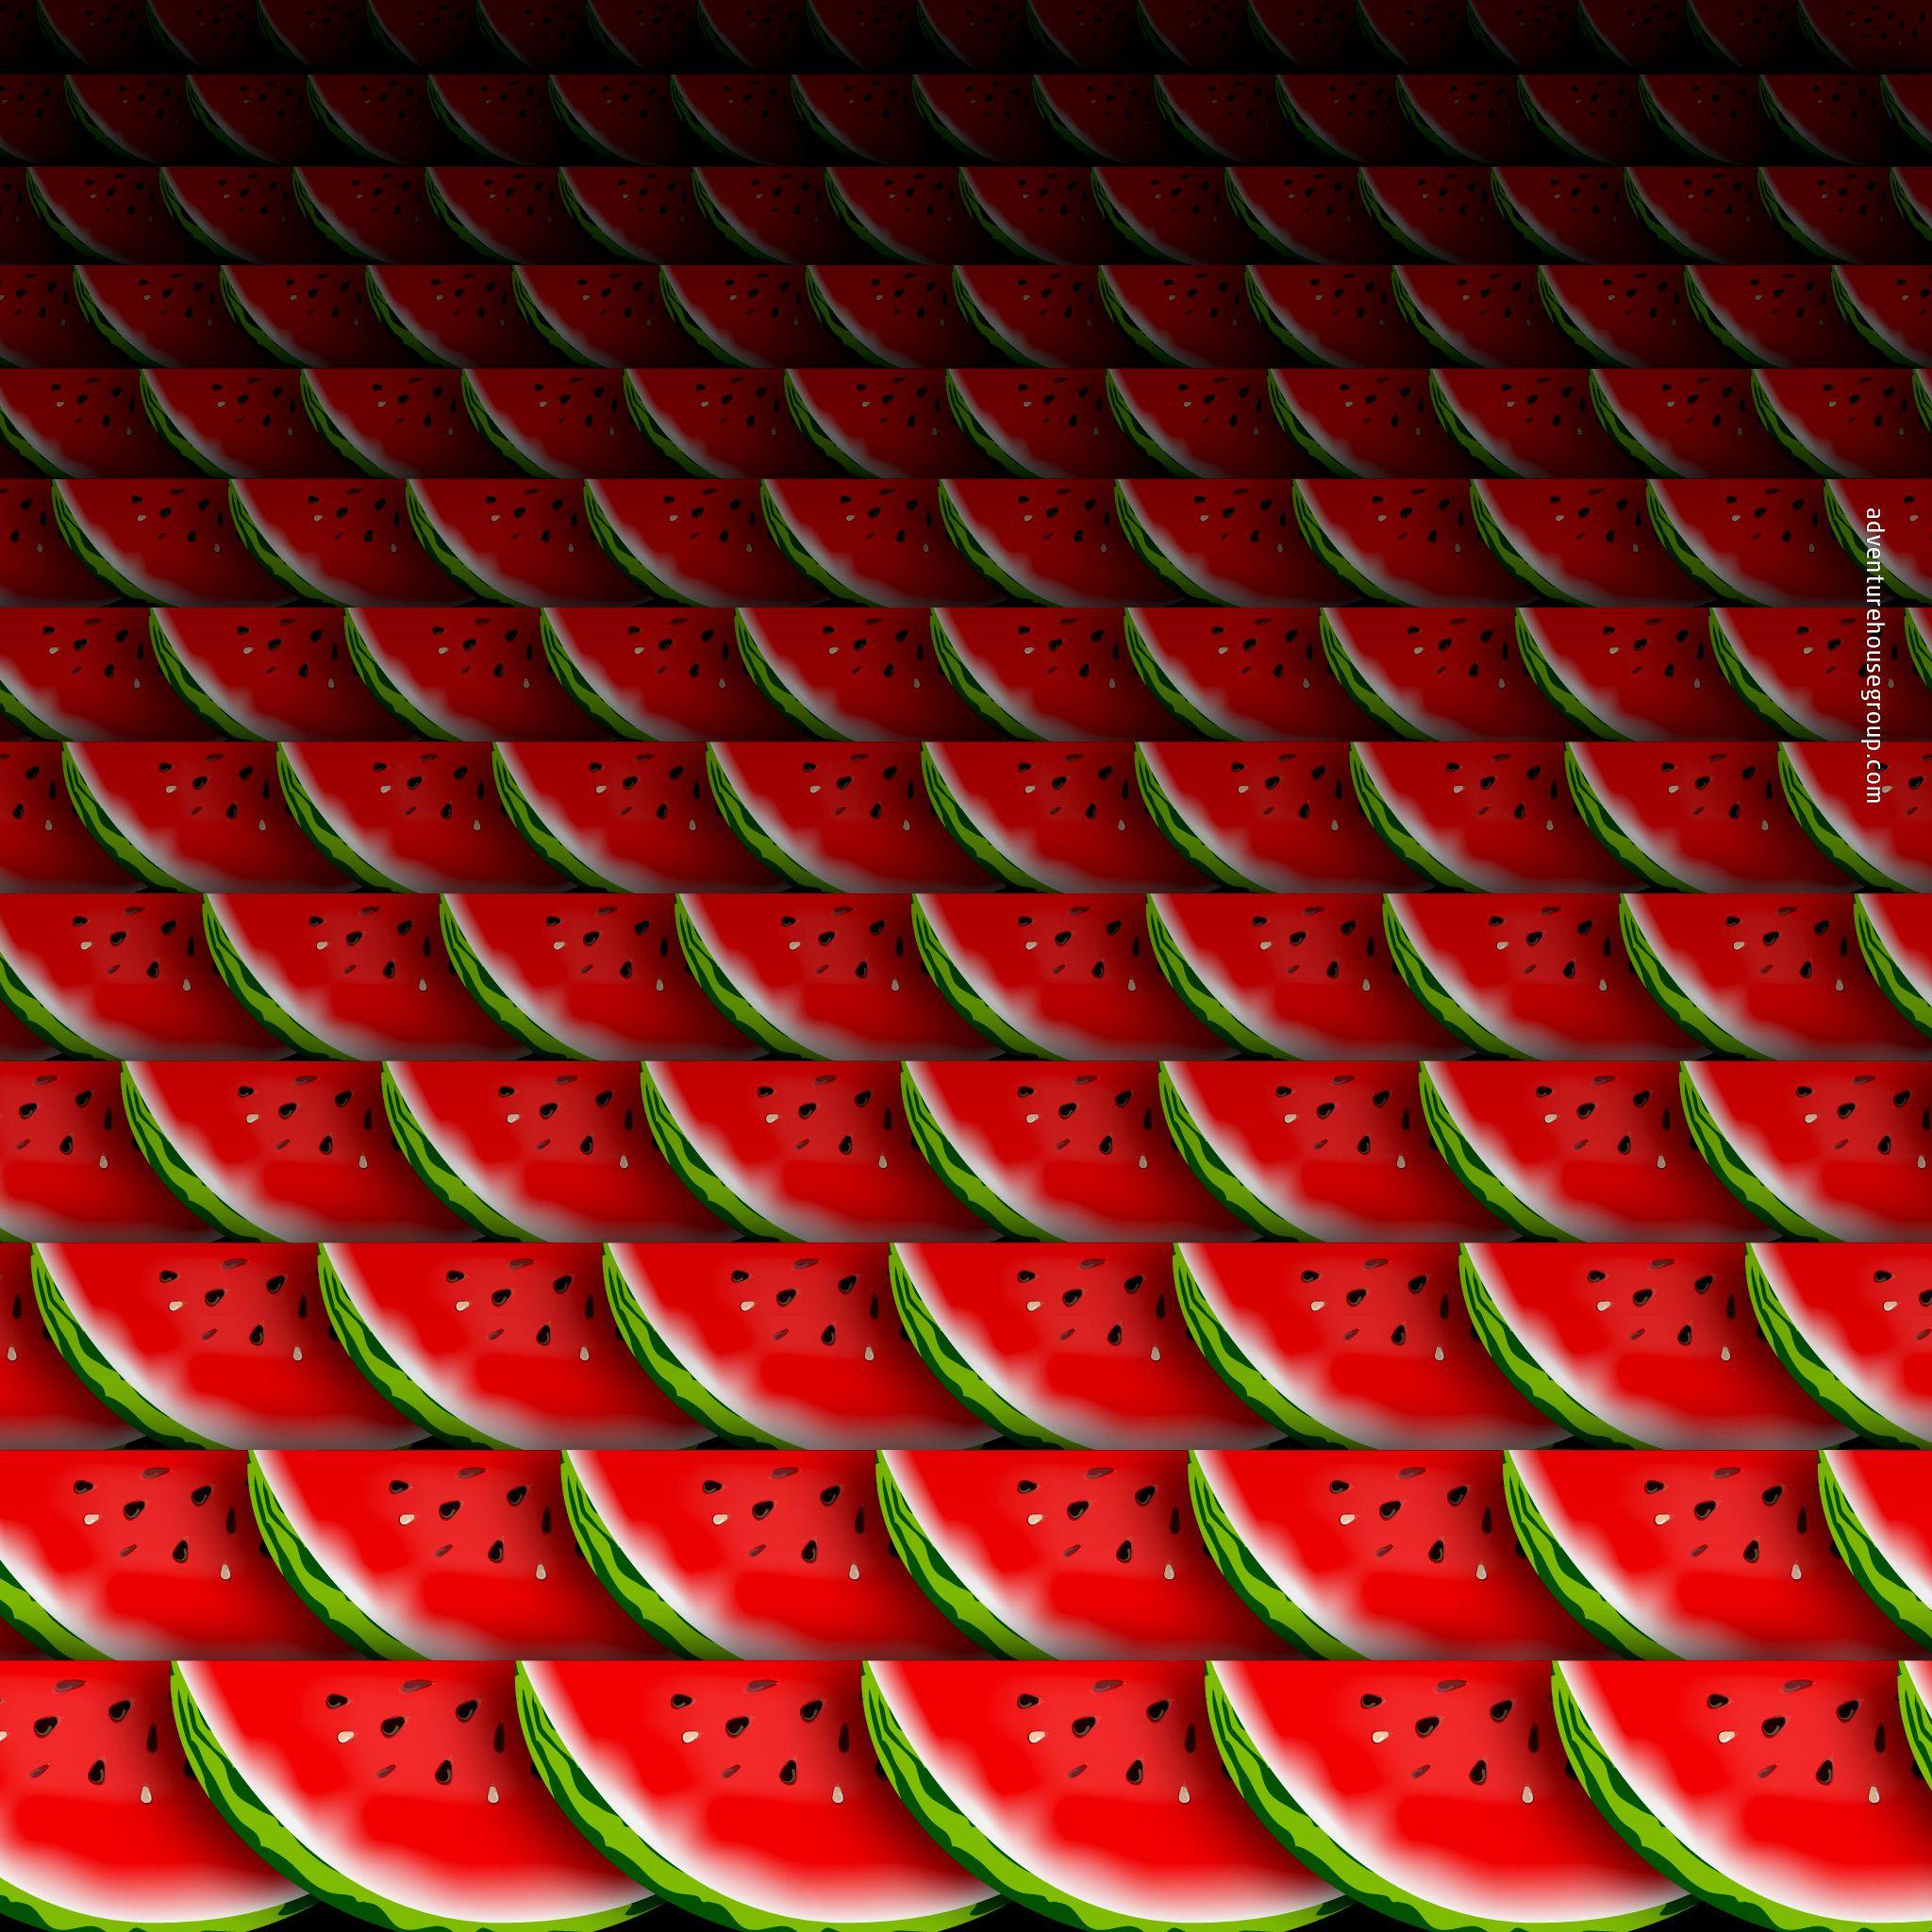 Download wallpaper: watermelons, photo wallpaper for desktop